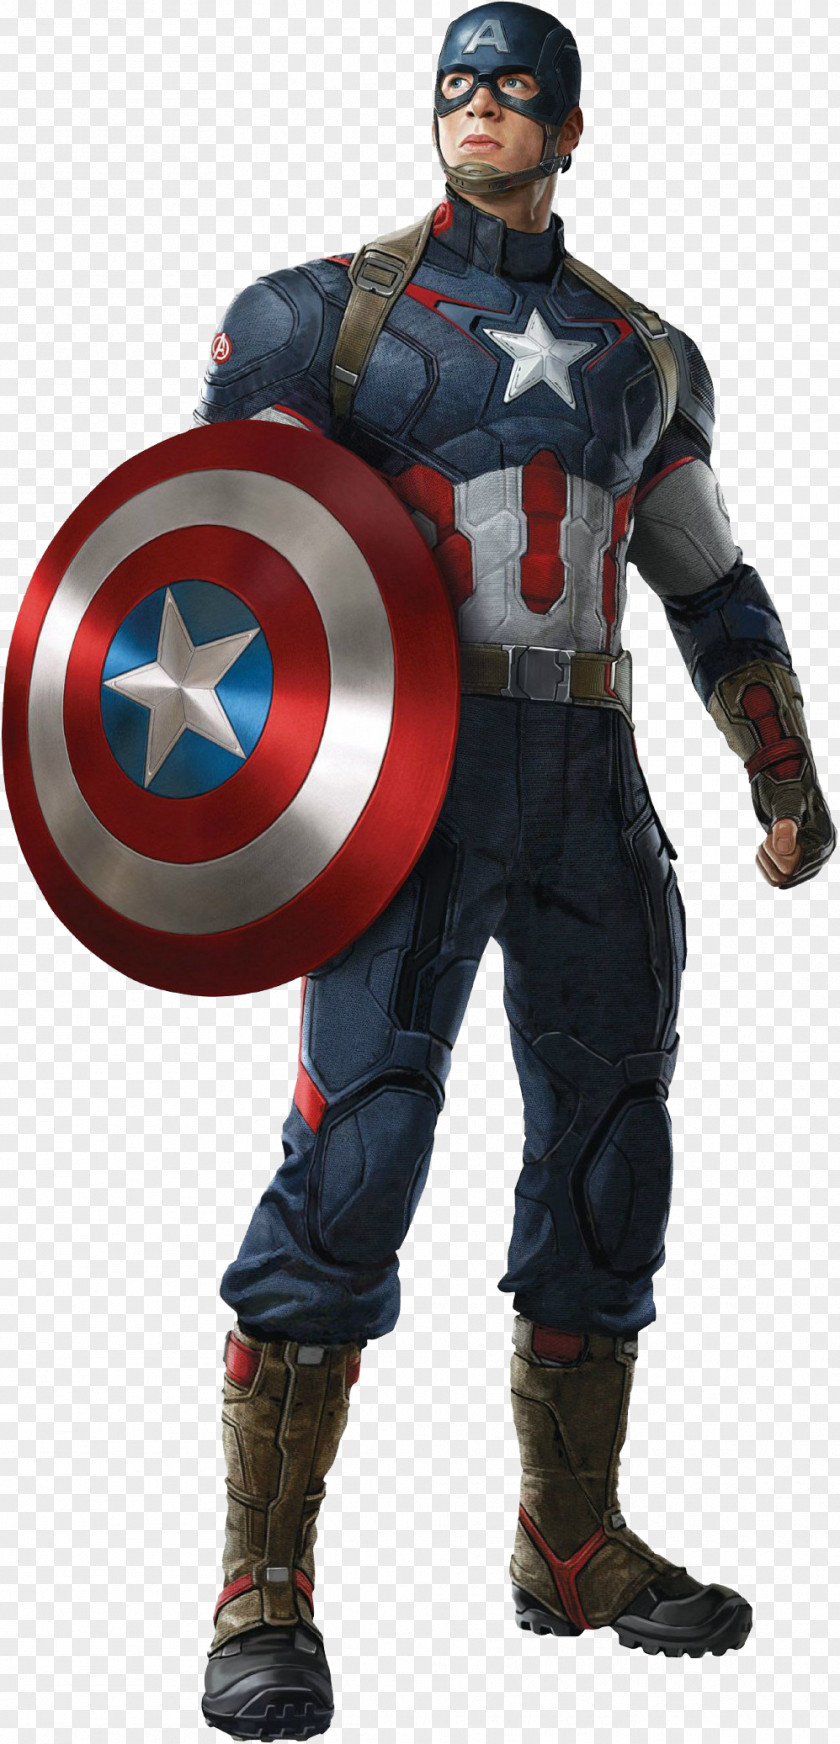 AVANGERS Captain America Black Widow Iron Man Bucky Costume PNG